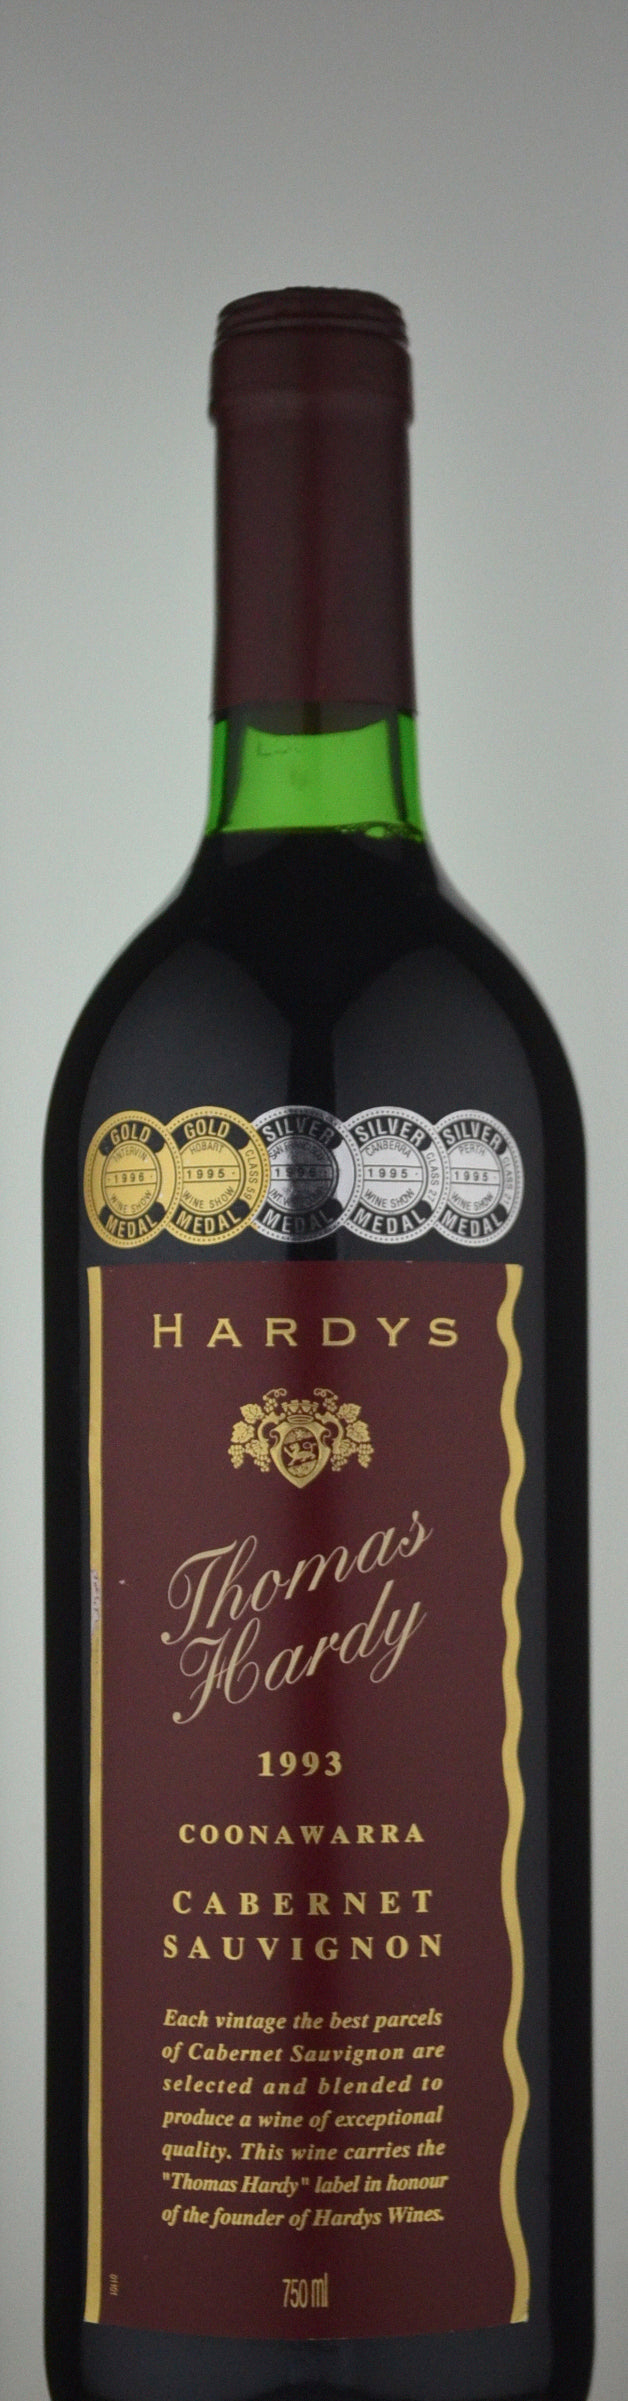 Hardy's Thomas Hardy Cabernet Sauvignon 1993